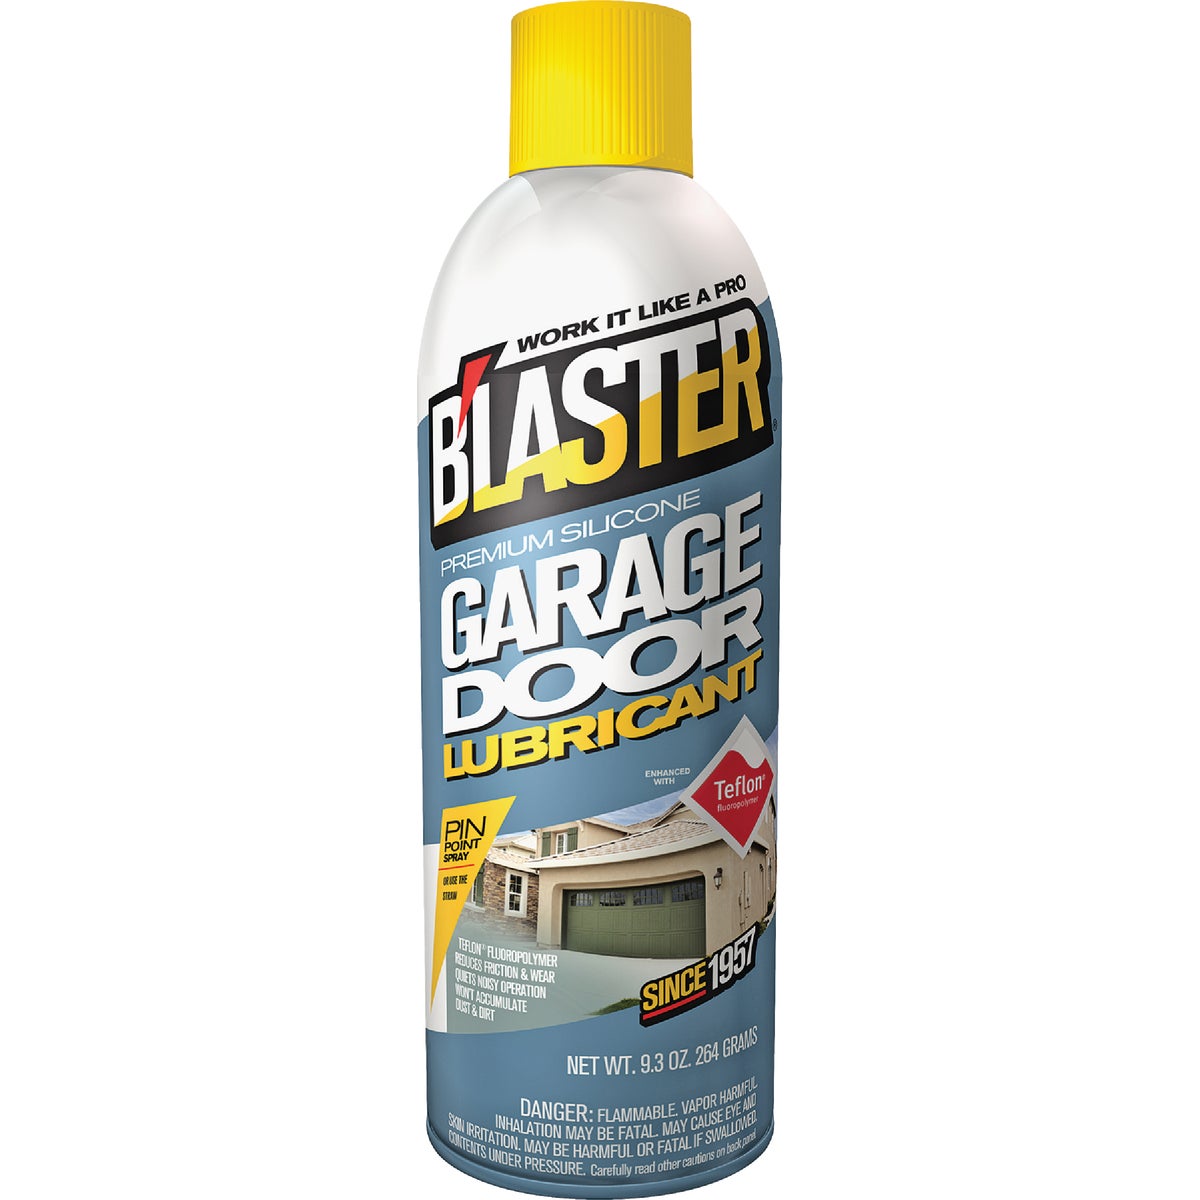 Item 570434, Effectively helps stop squeaks associated with garage doors and mechanisms 